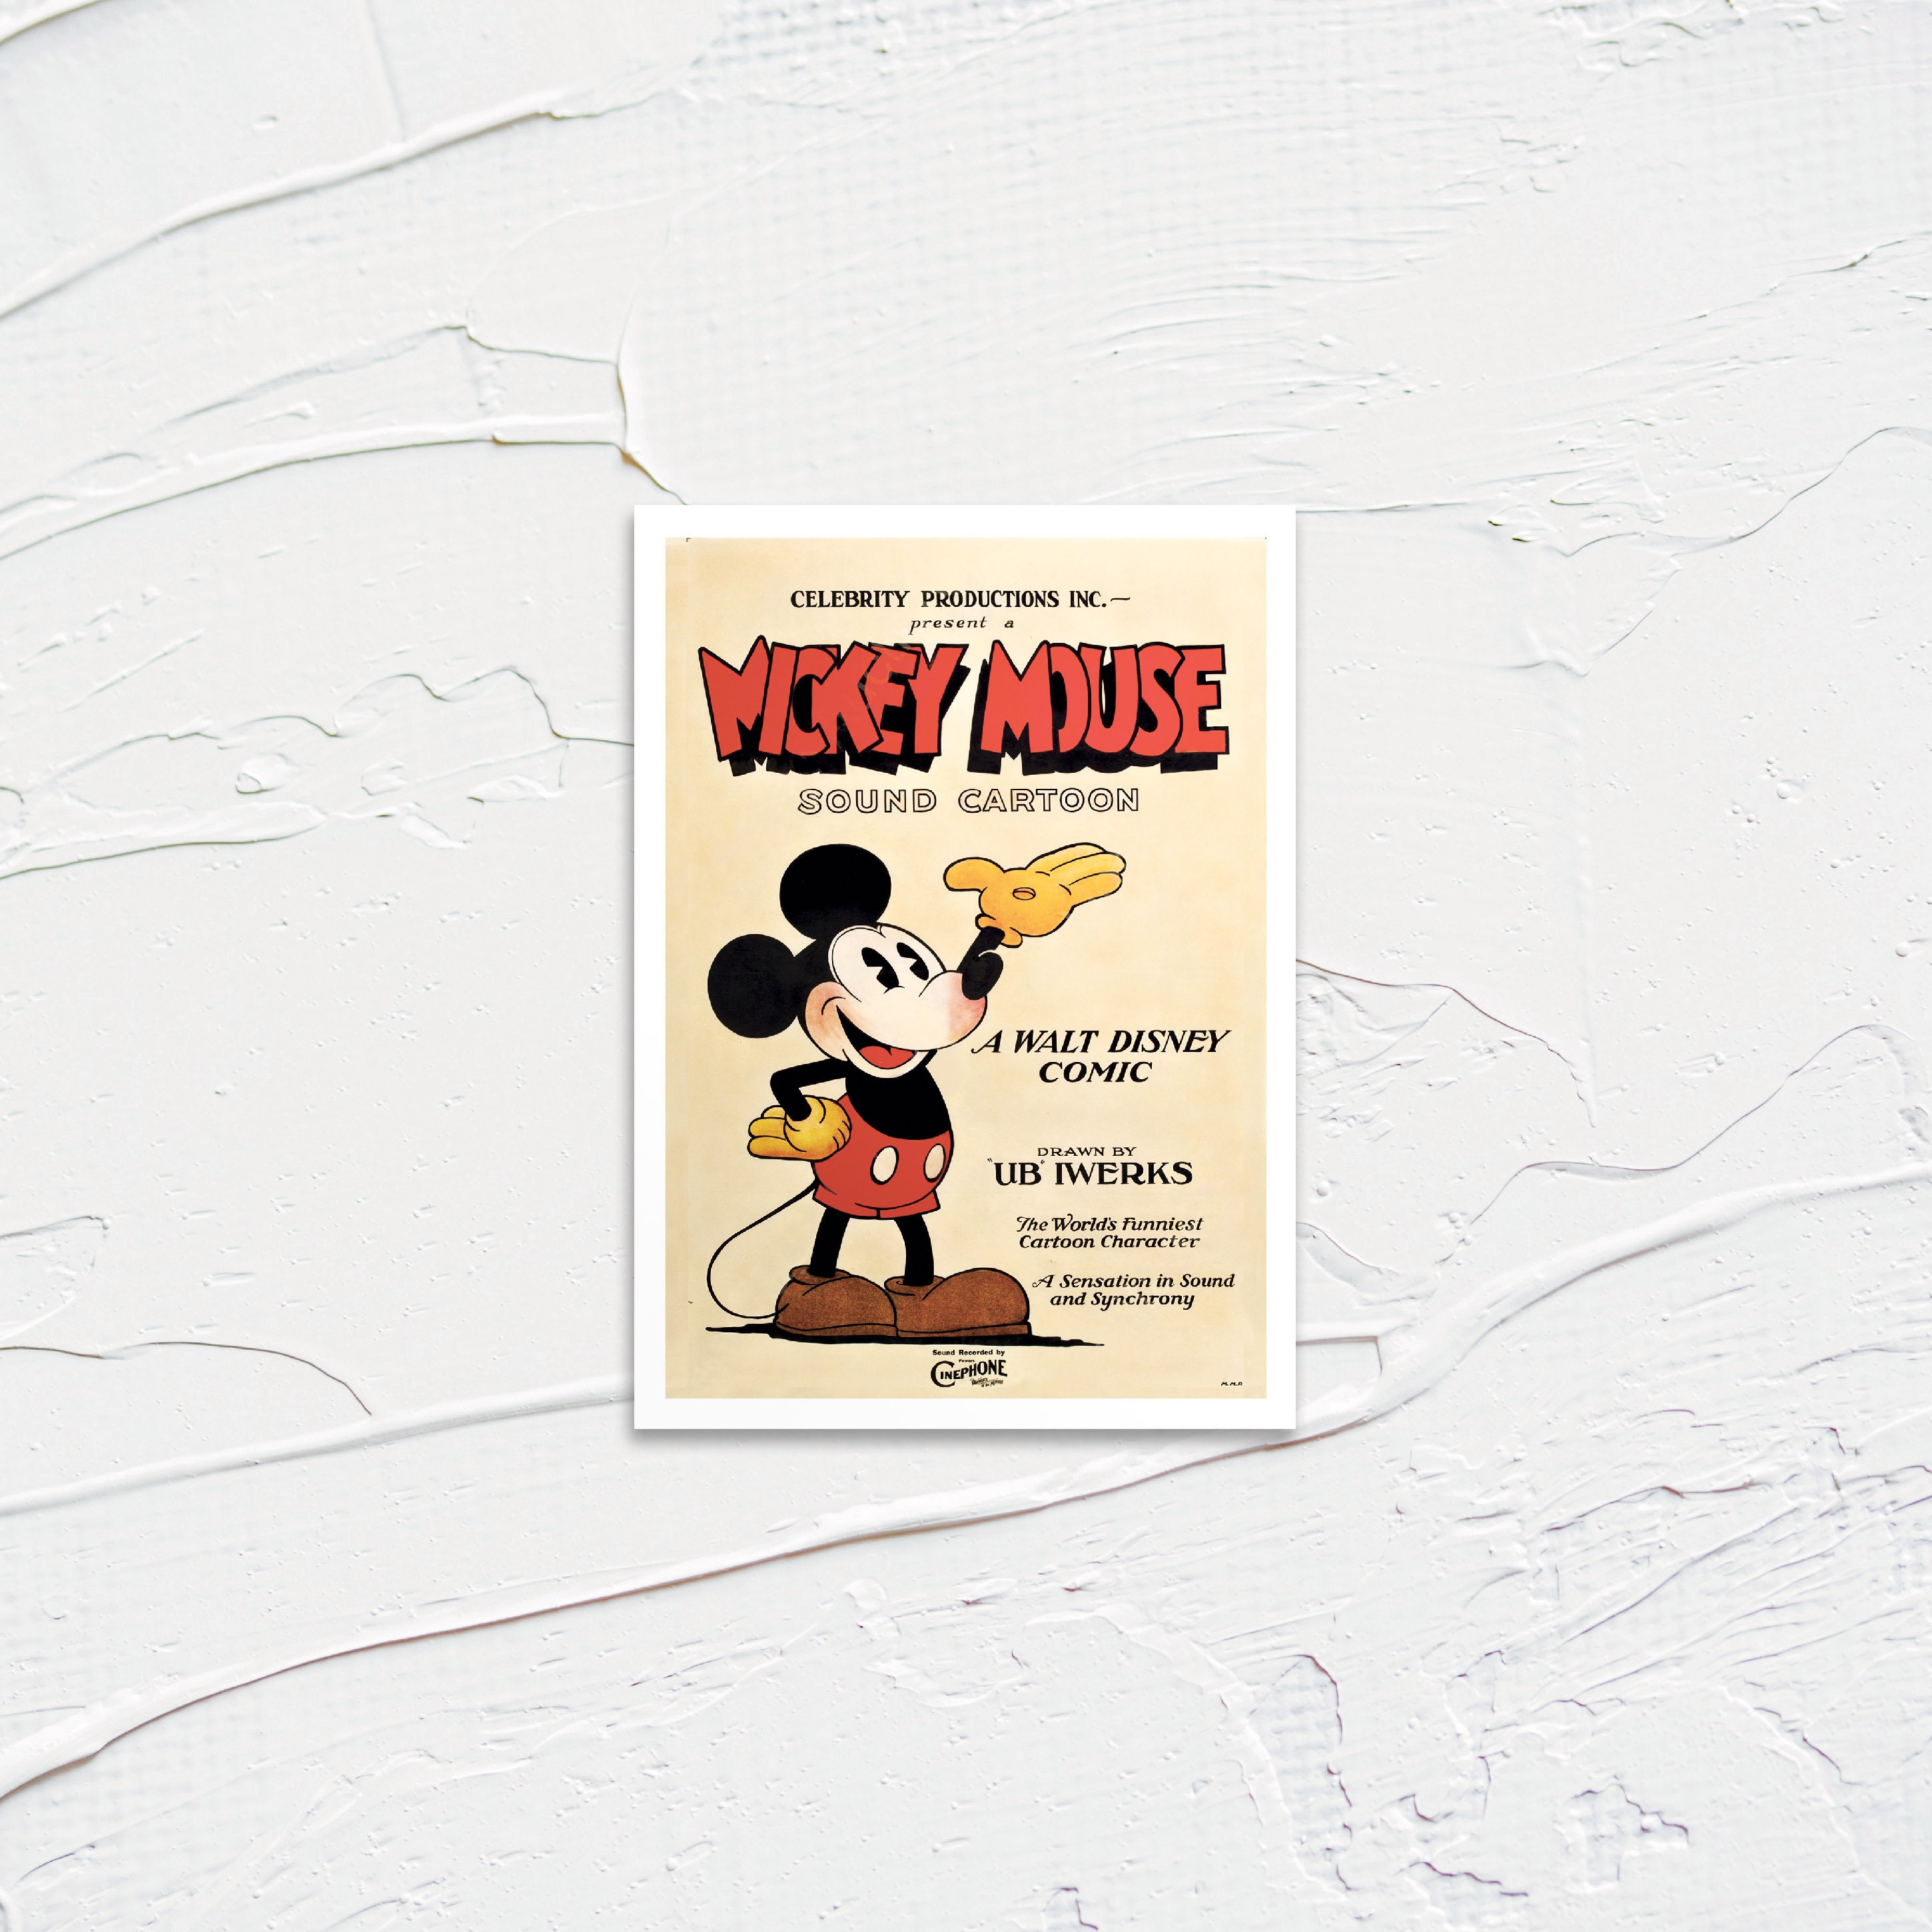 Sudadera Mickey Mouse - $250.00